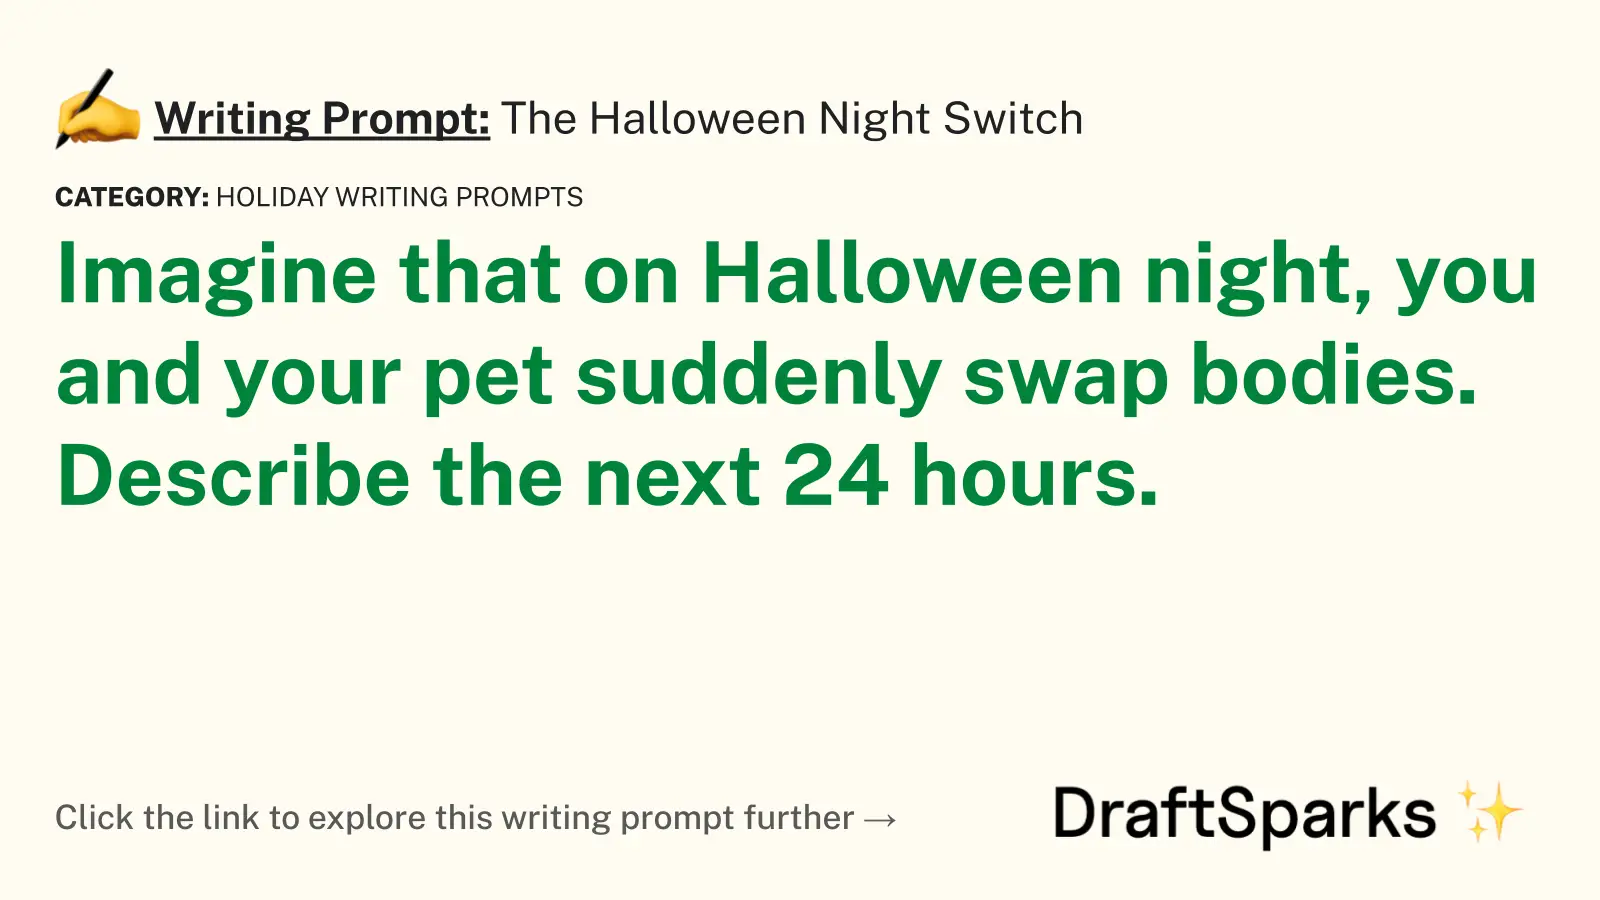 The Halloween Night Switch